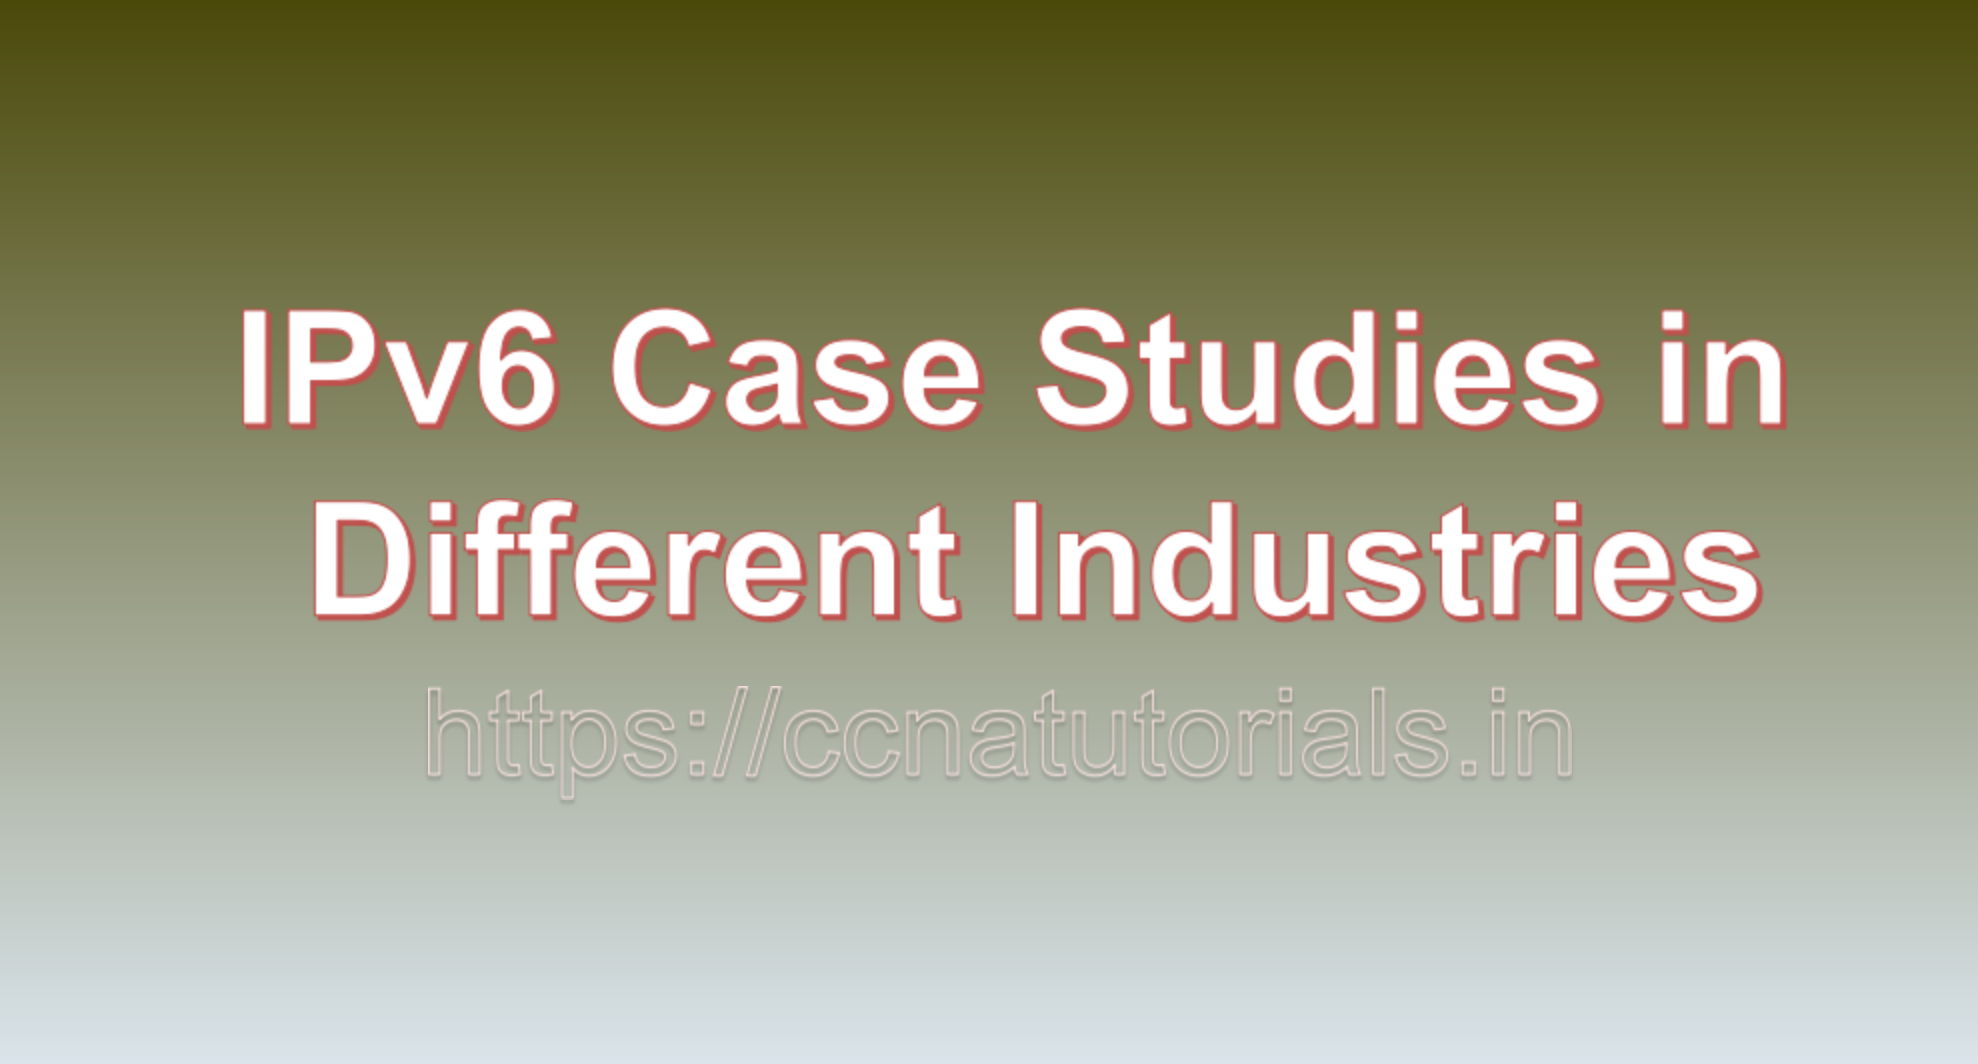 IPv6 Case Studies in Industries, ccna, ccna tutorials